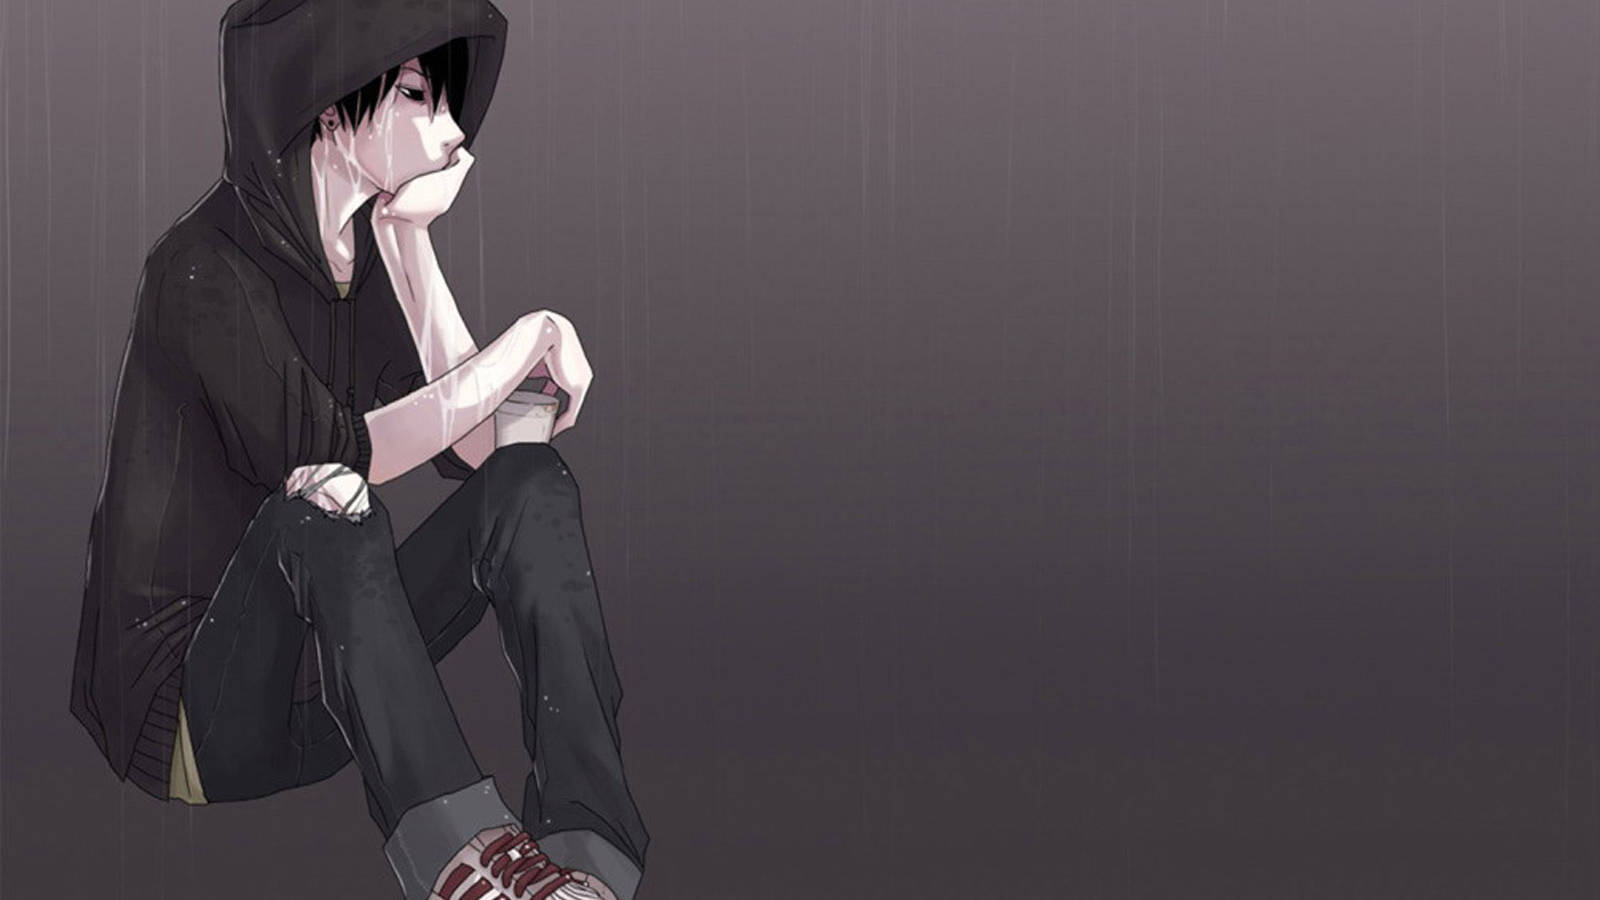 Top 999+ Sad Boy Anime Wallpaper Full HD, 4K✅Free to Use